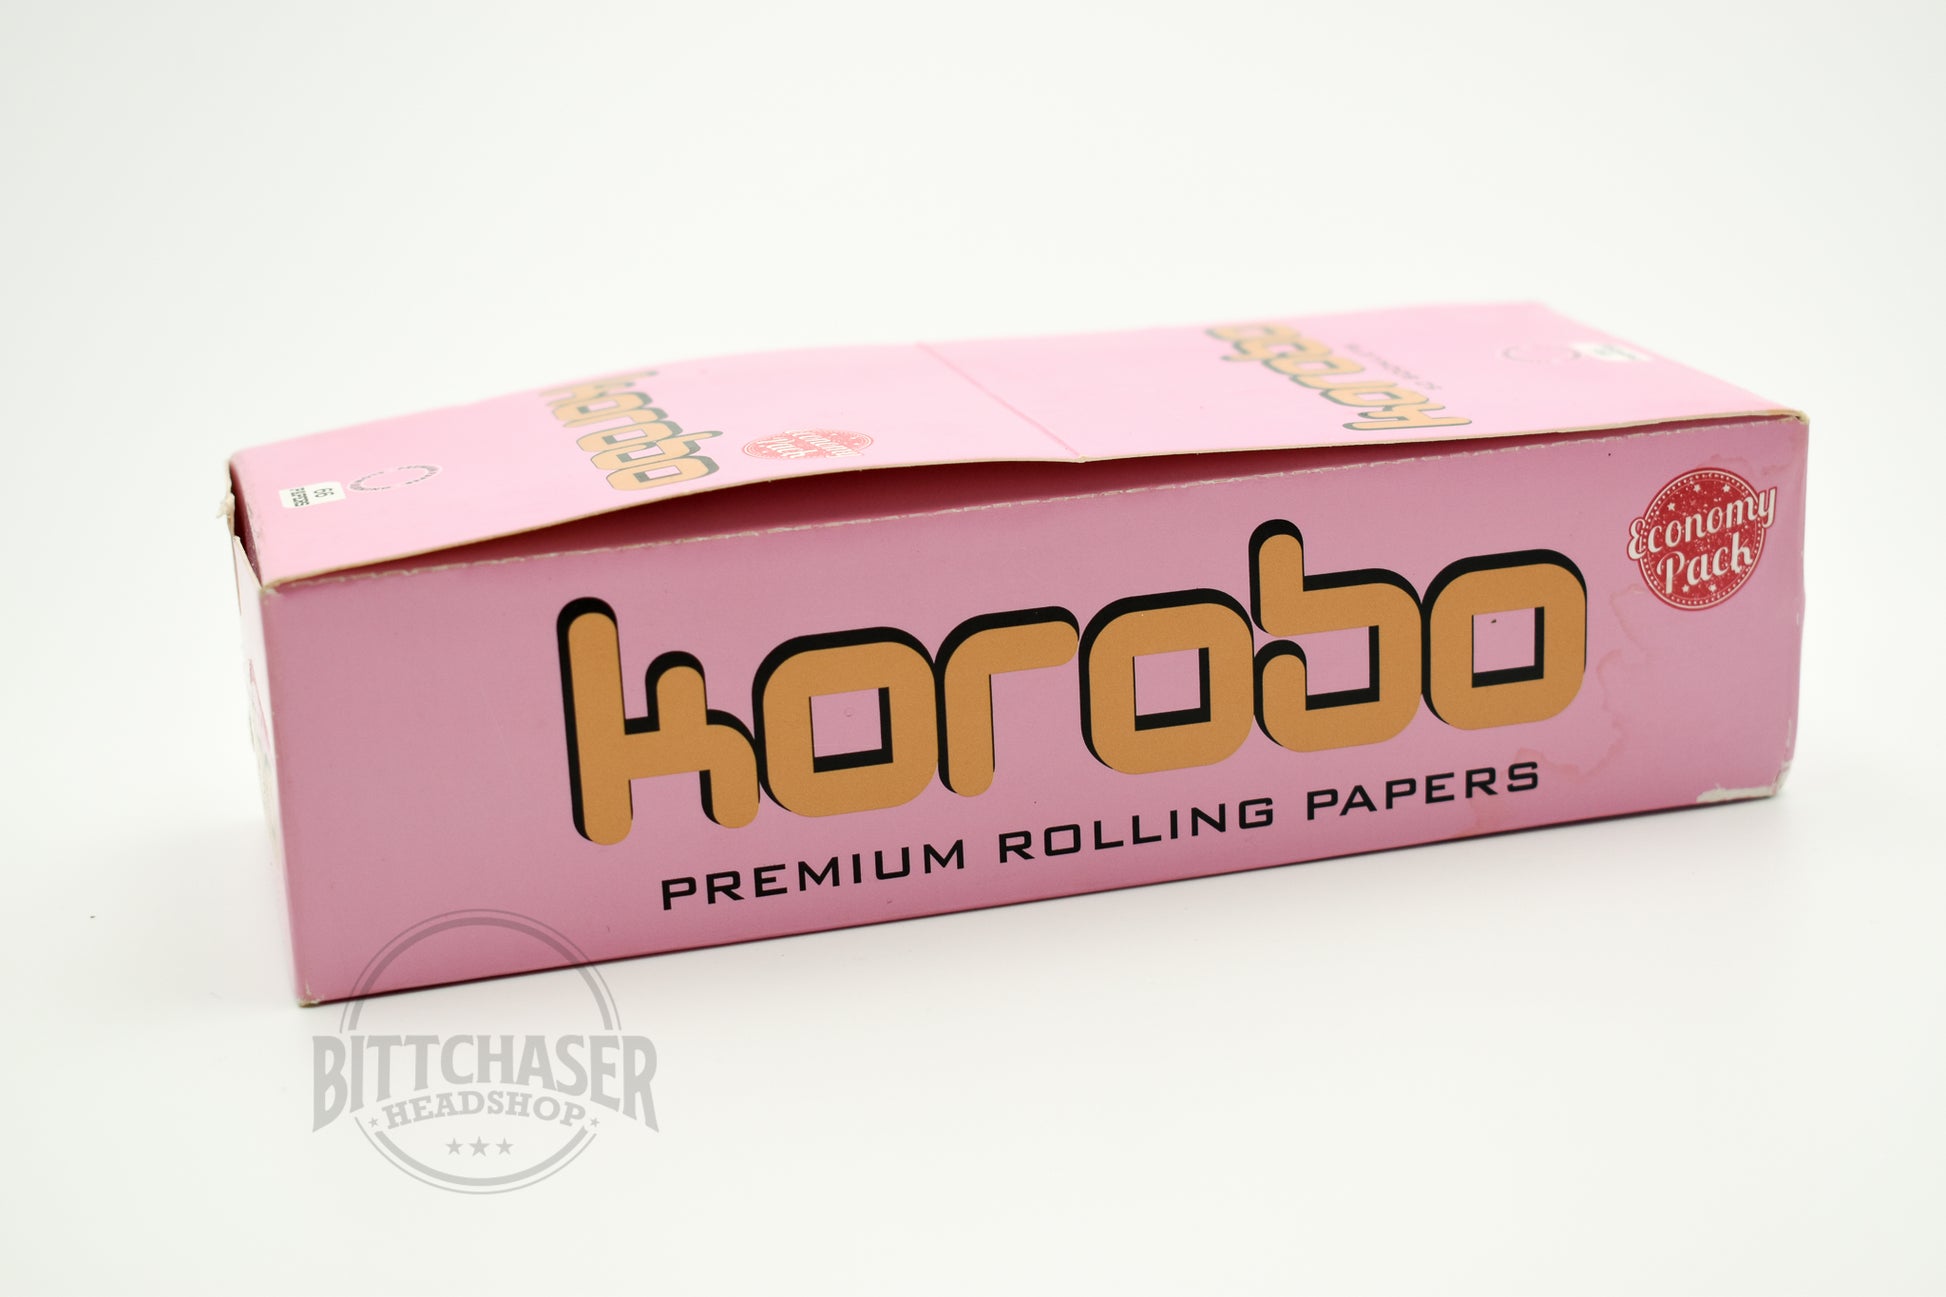 Korobo White Regular Size (Full Box) - Bittchaser Smoke Shop